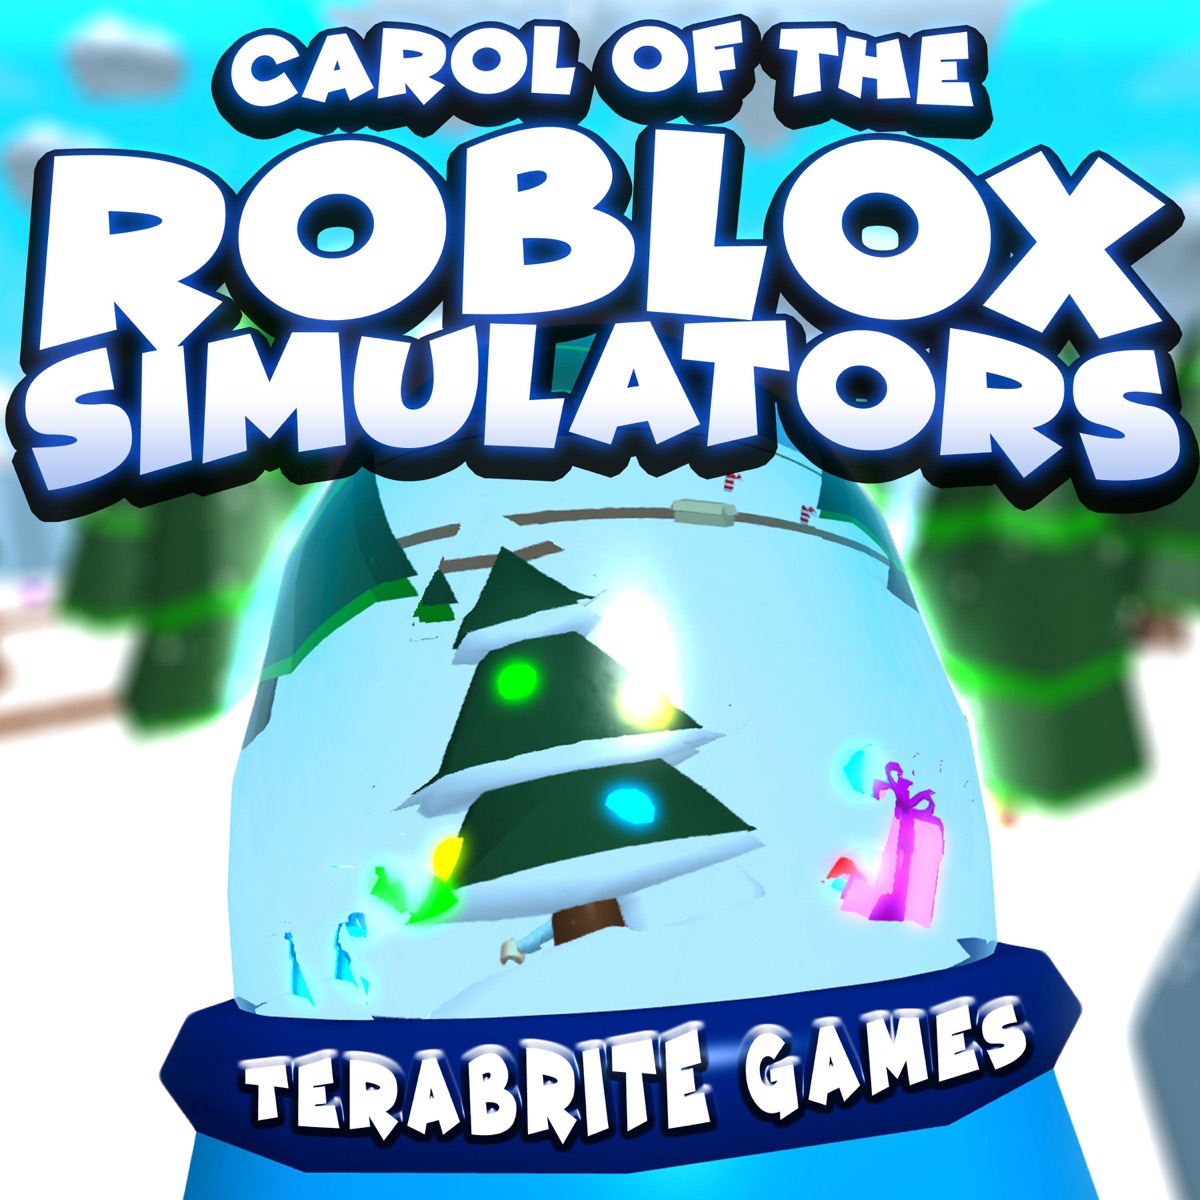 Carol Of The Roblox Simulators Terabrite Games Lyrics Ratings And Reviews - brass song id roblox